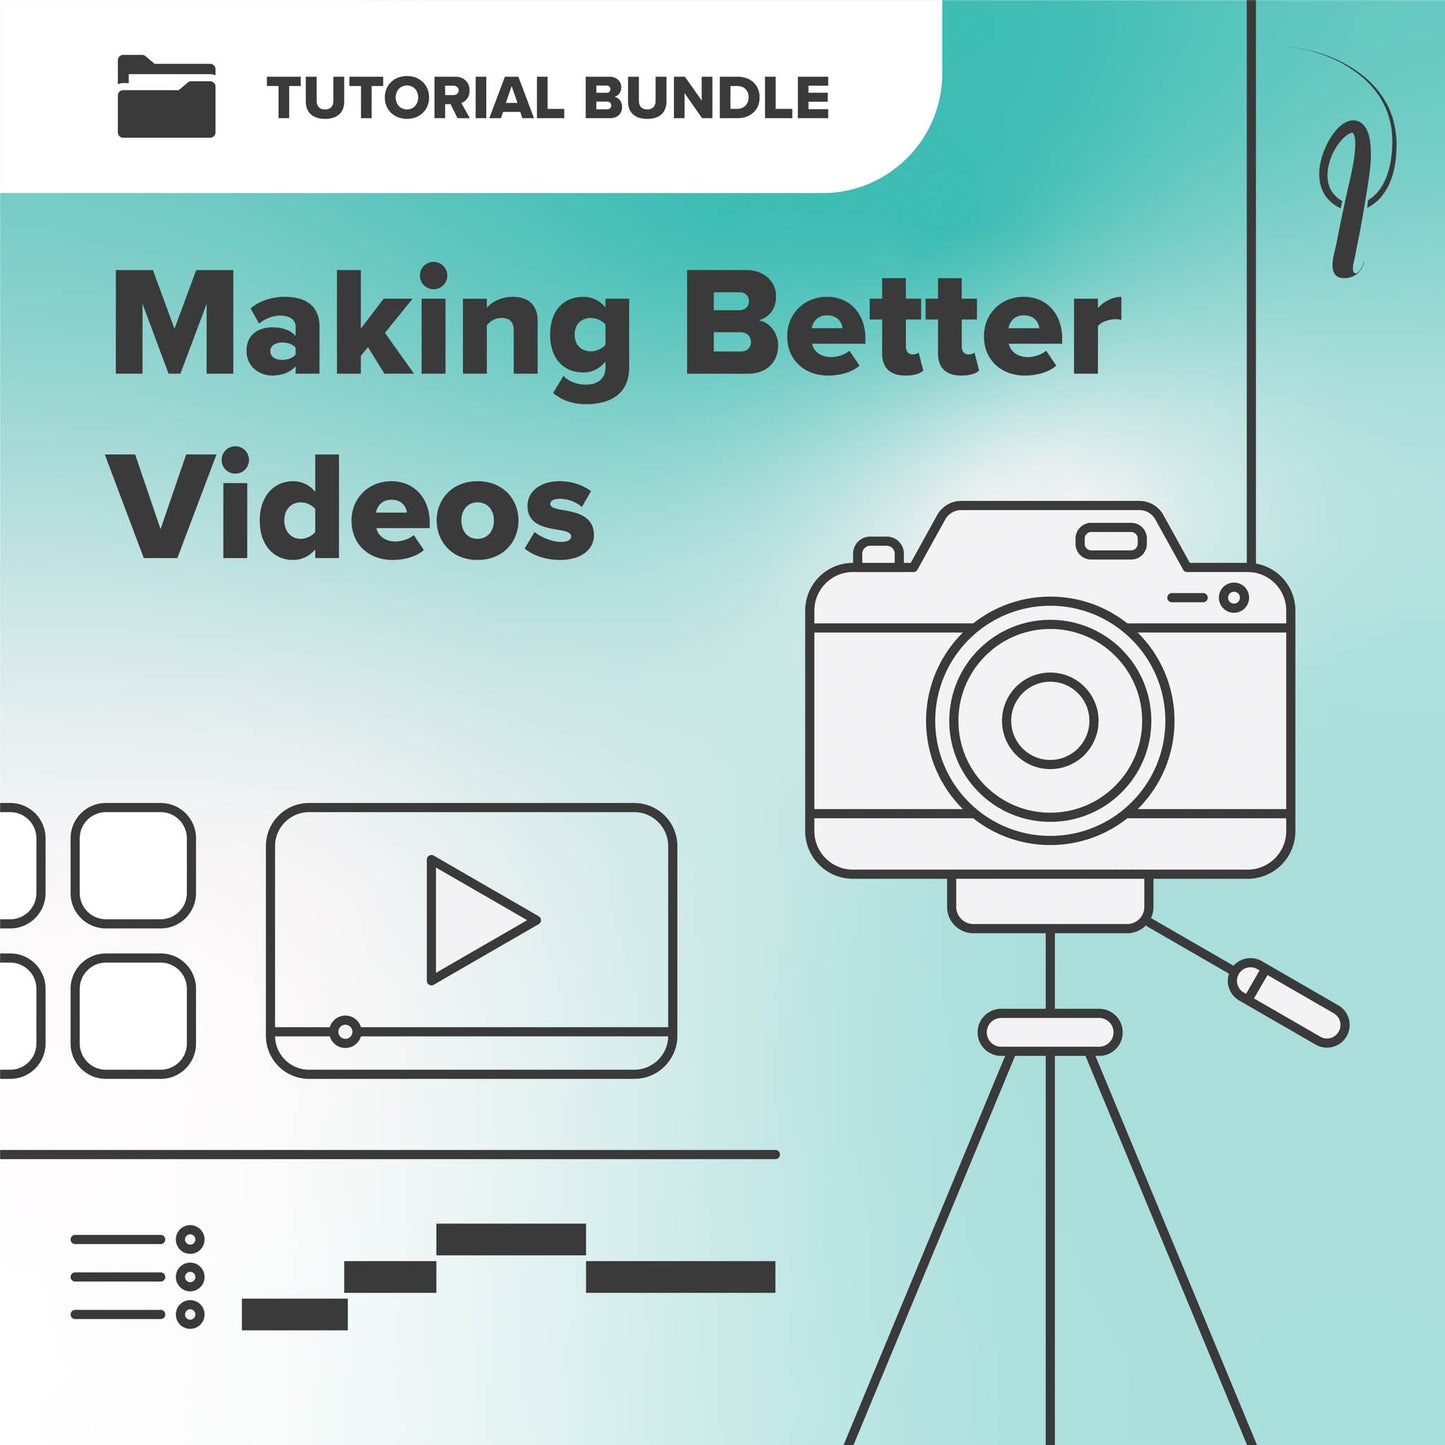 Making Better Videos - Tutorial Bundle